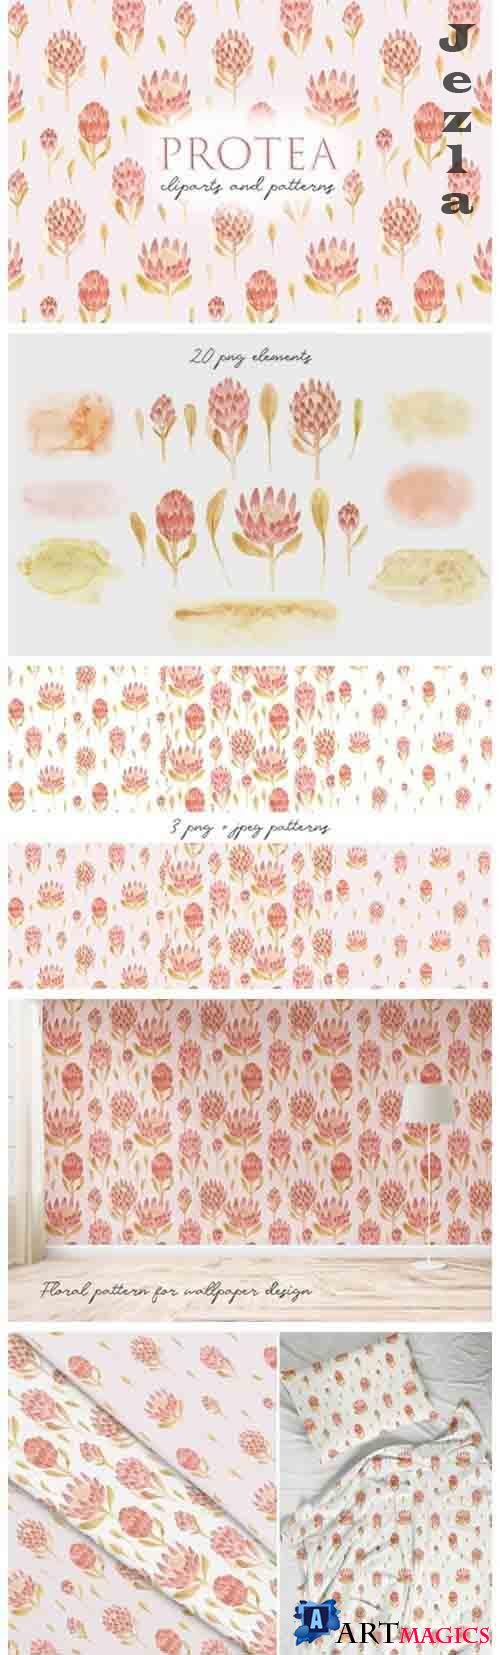 Watercolor Protea Flowers. Patterns - 3910528